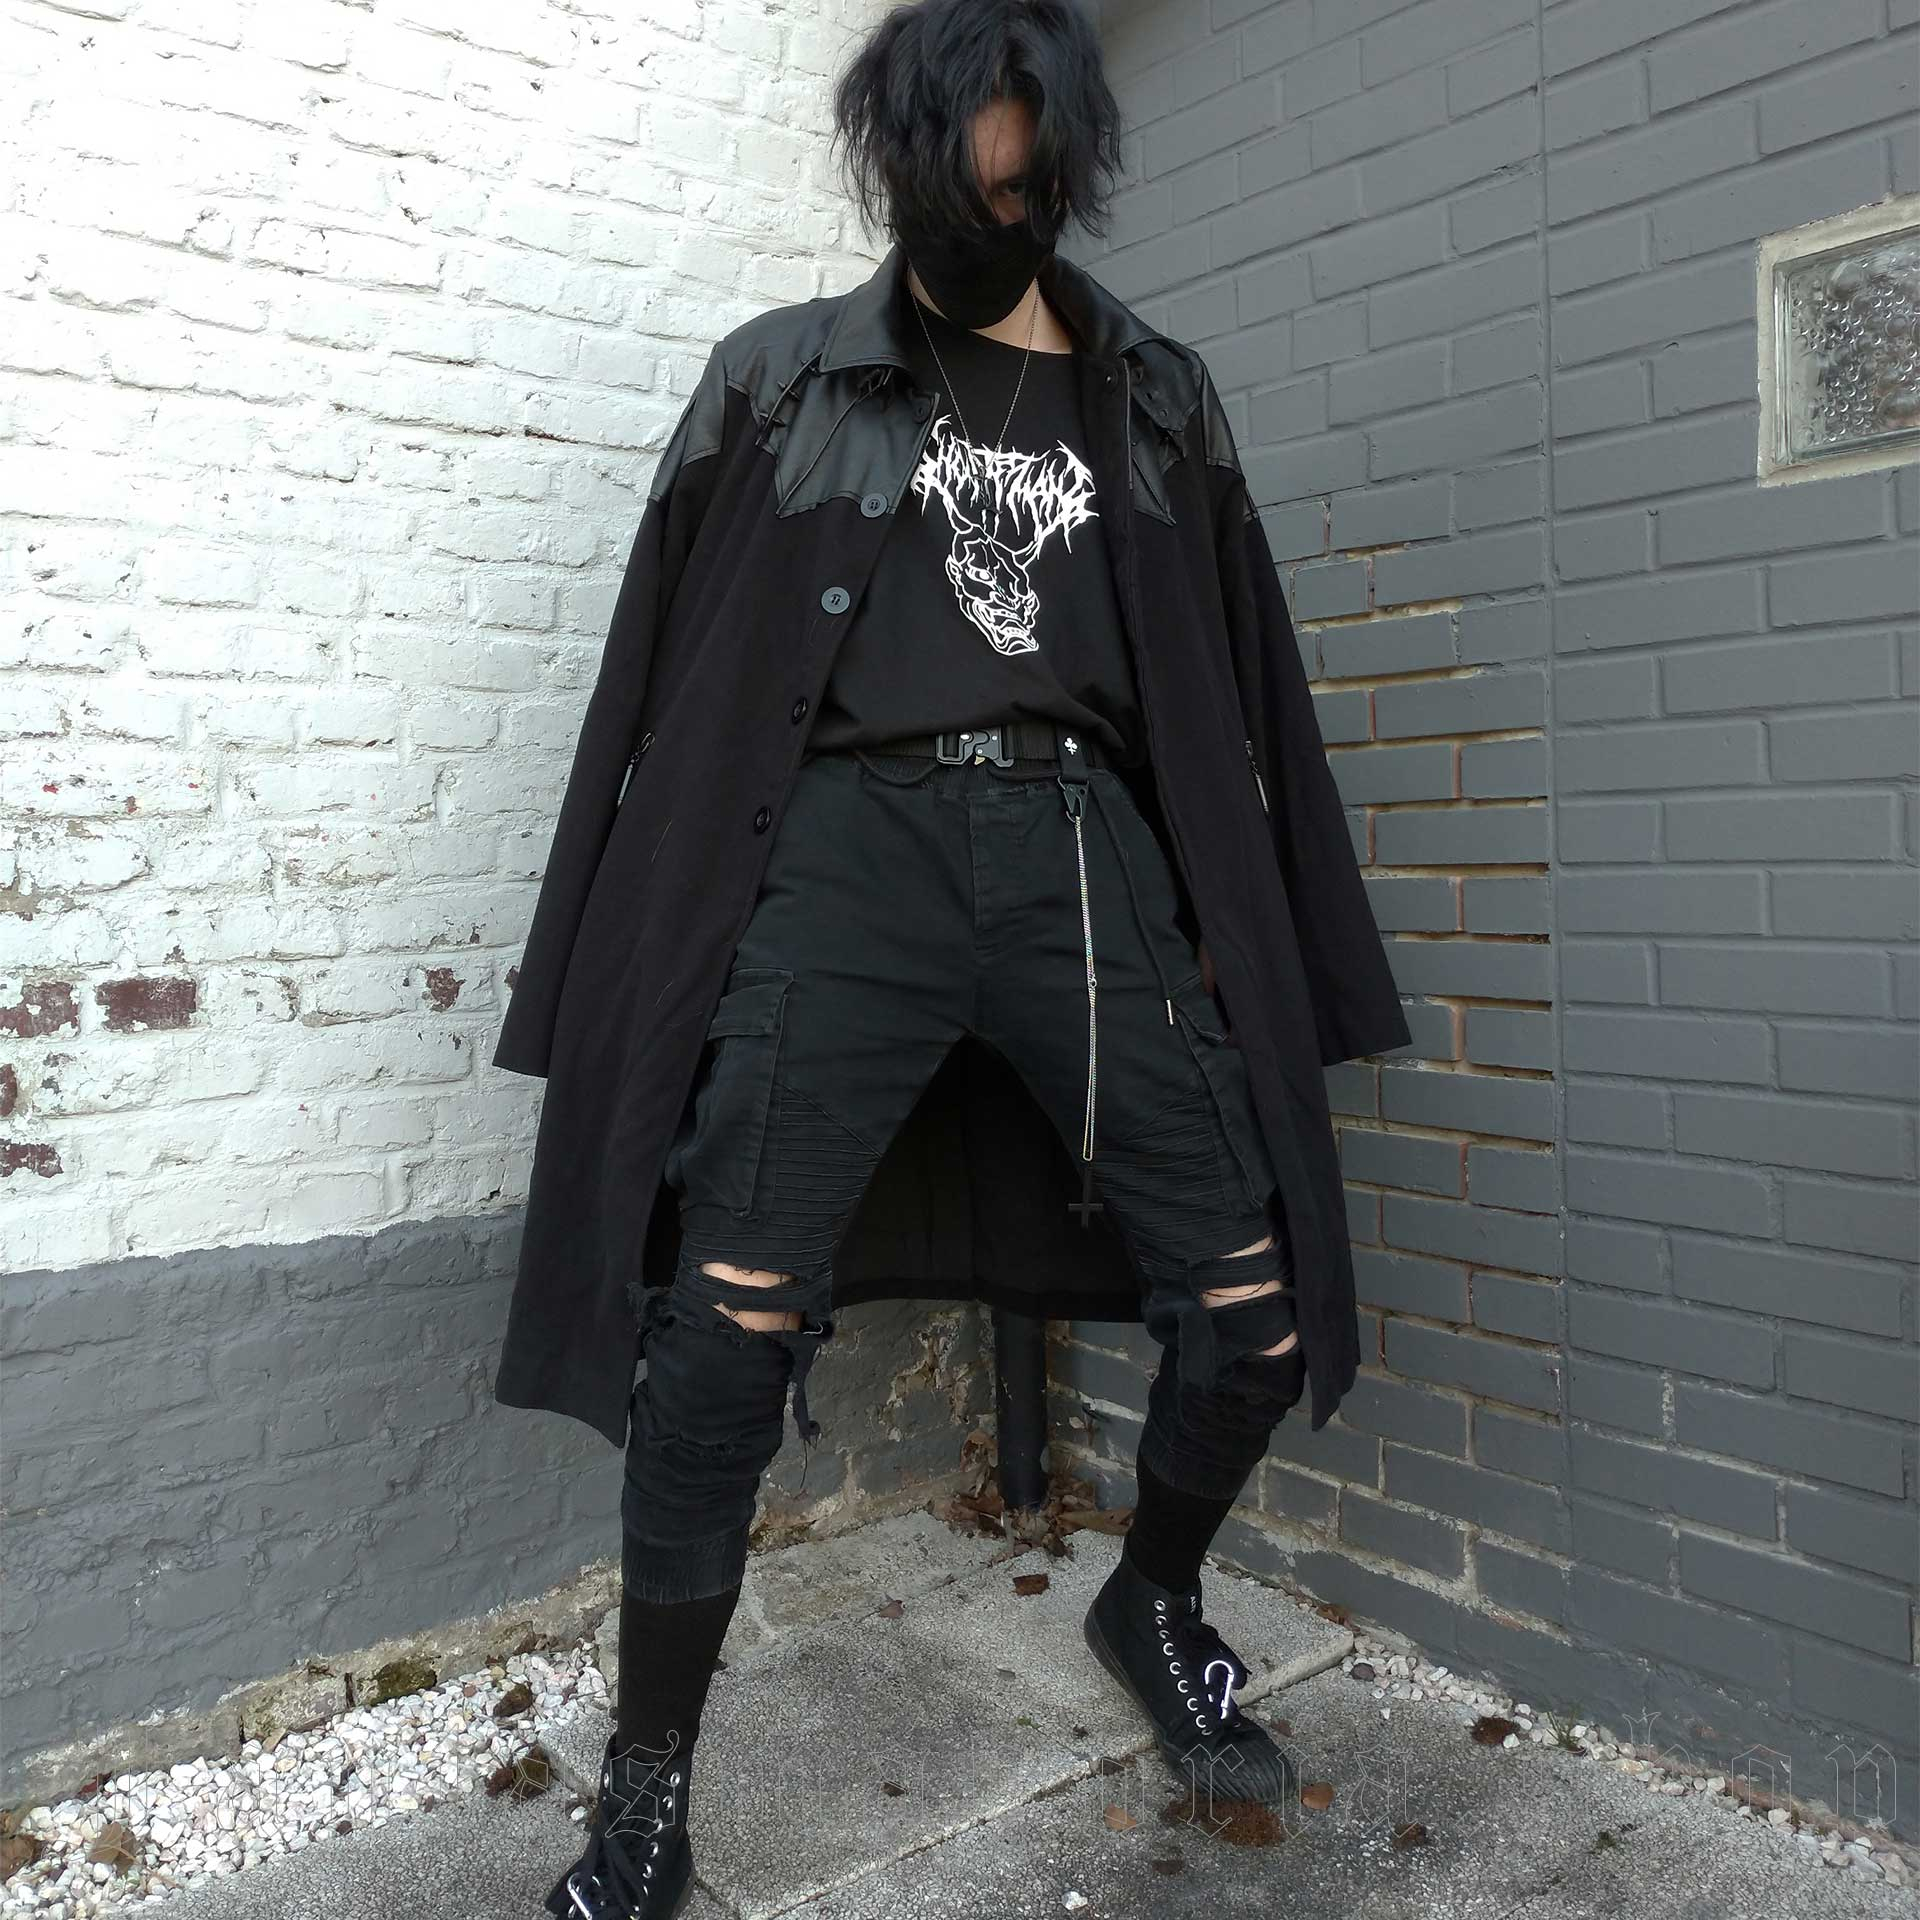 The Bat Coat by Punk Rave brand